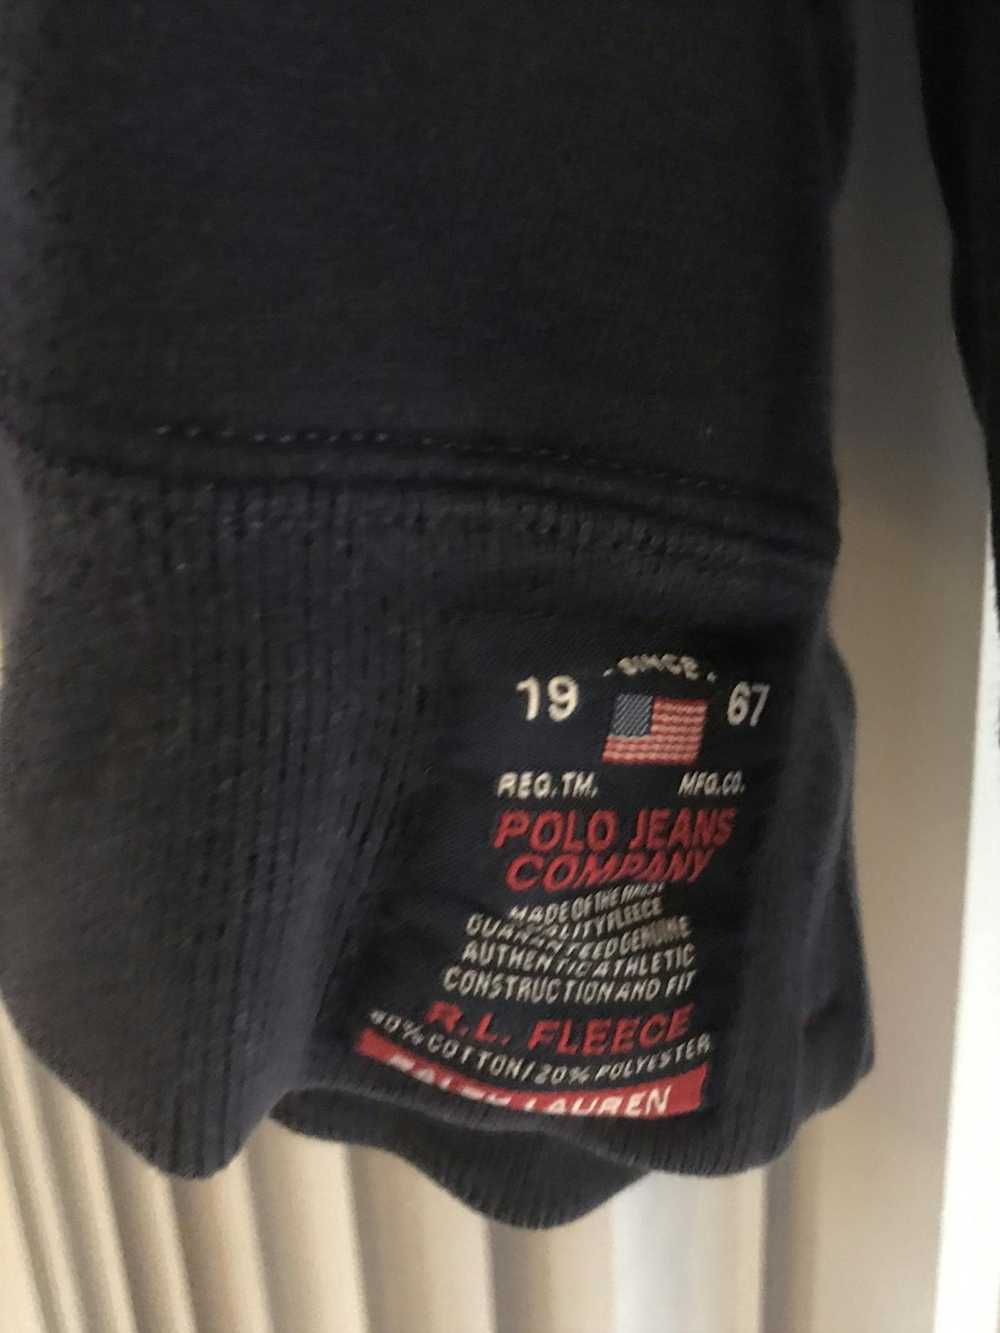 Polo Ralph Lauren Polo Jeans Crewneck - image 2